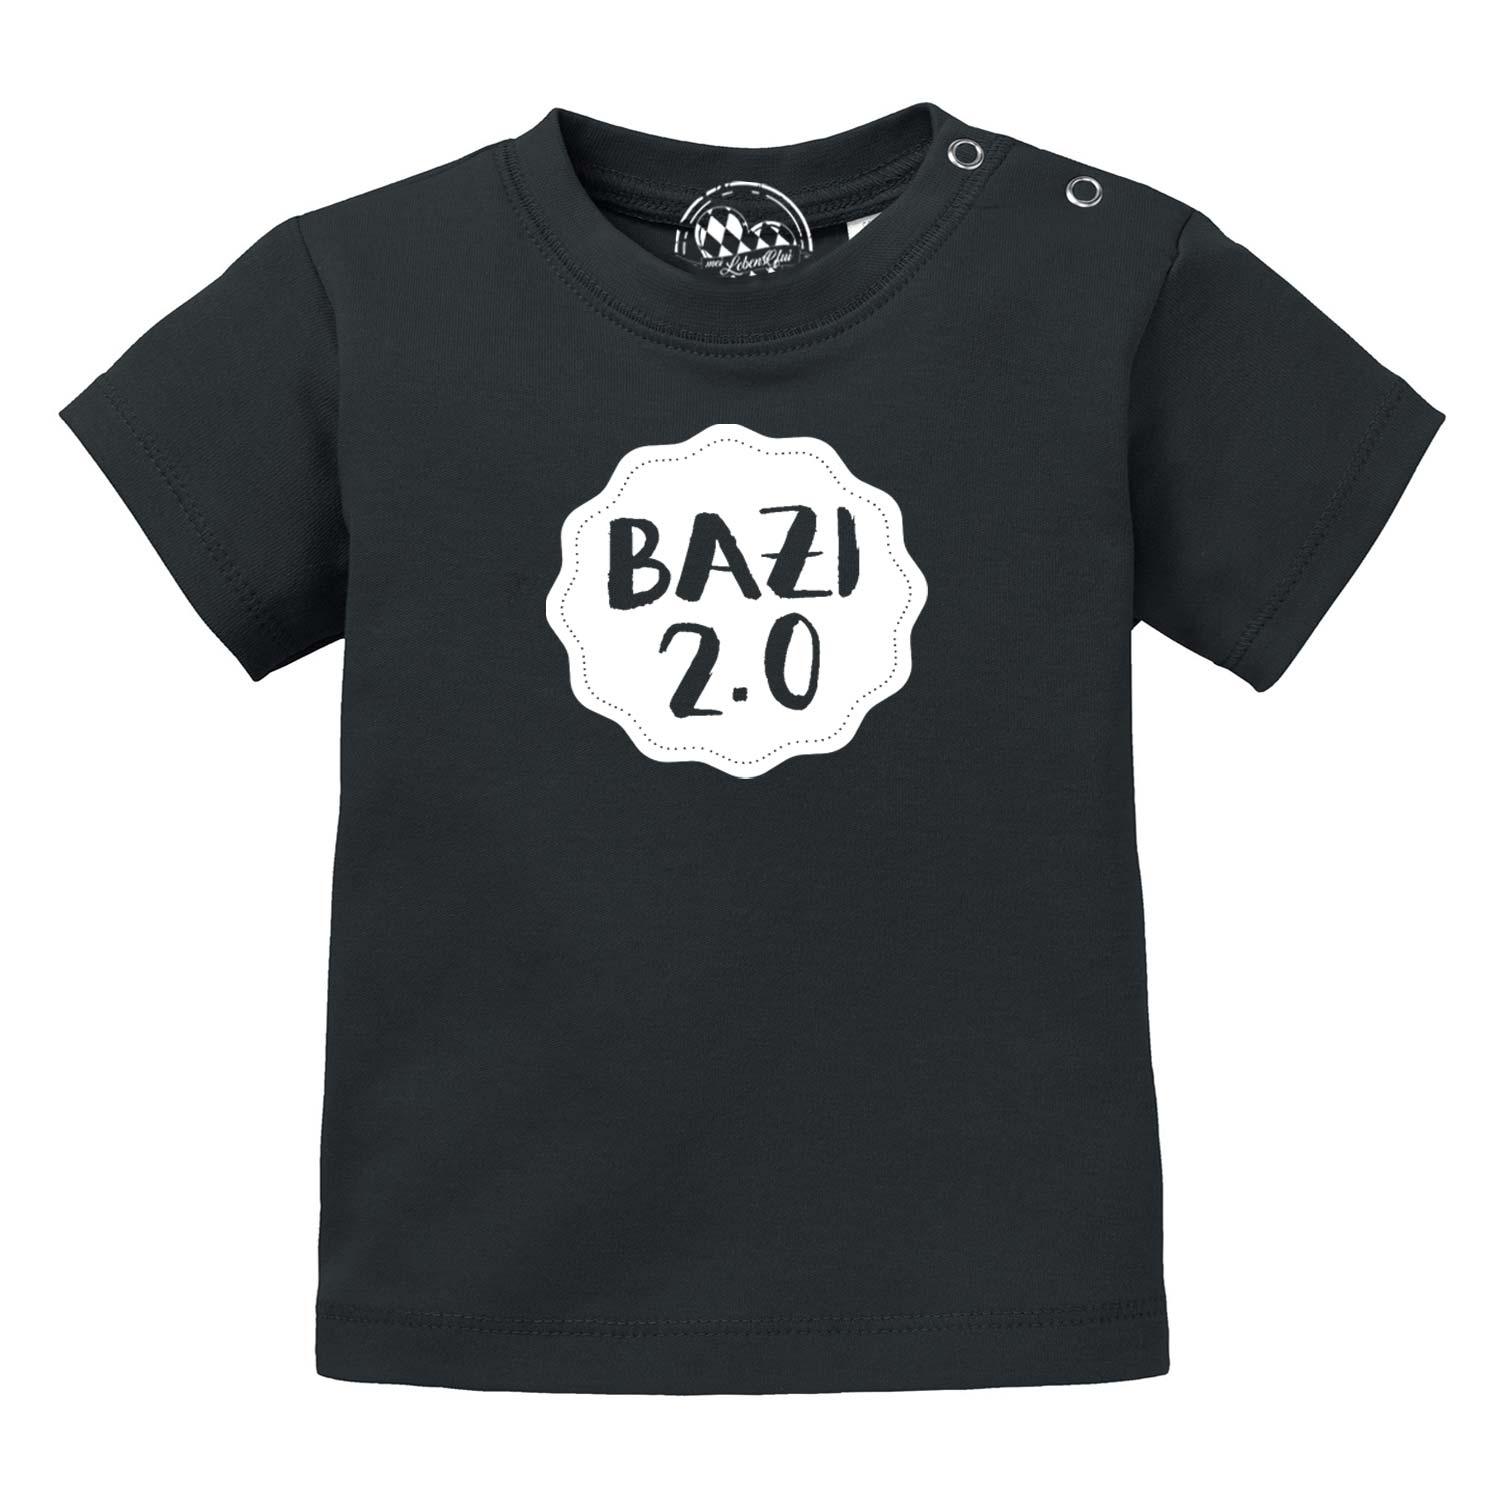 Baby T-Shirt "Bazi 2.0" - bavariashop - mei LebensGfui